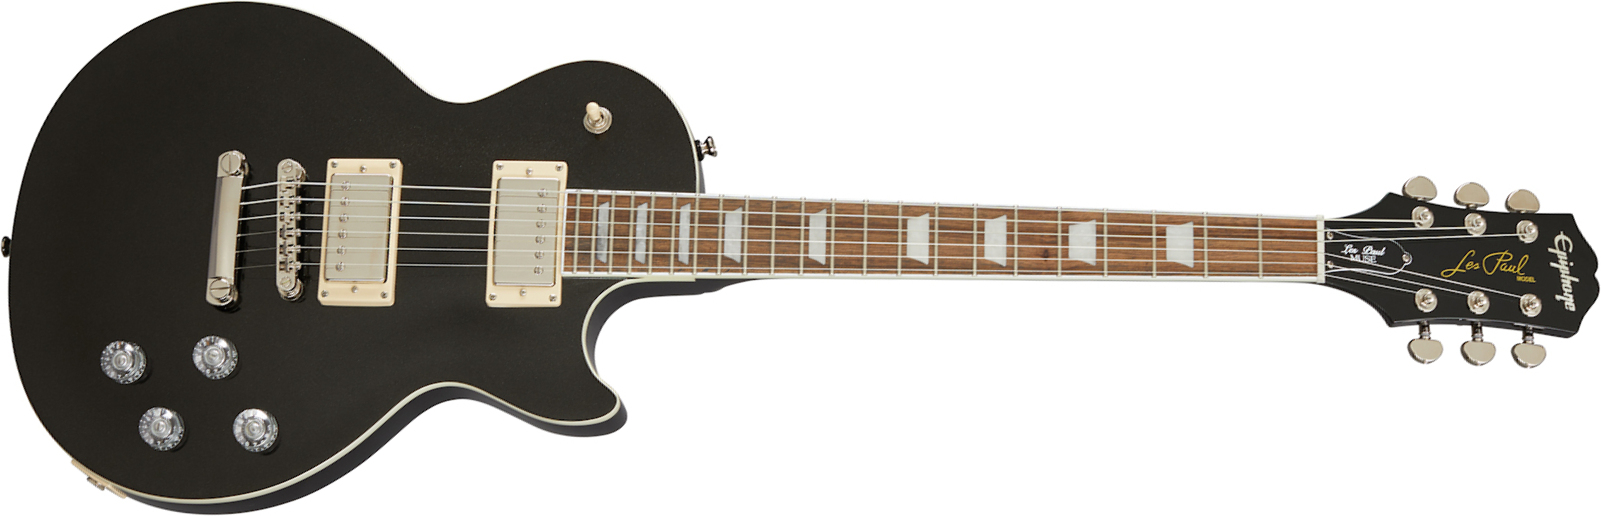 Epiphone Les Paul Muse Modern 2h Ht Lau - Jet Black Metallic - Enkel gesneden elektrische gitaar - Main picture